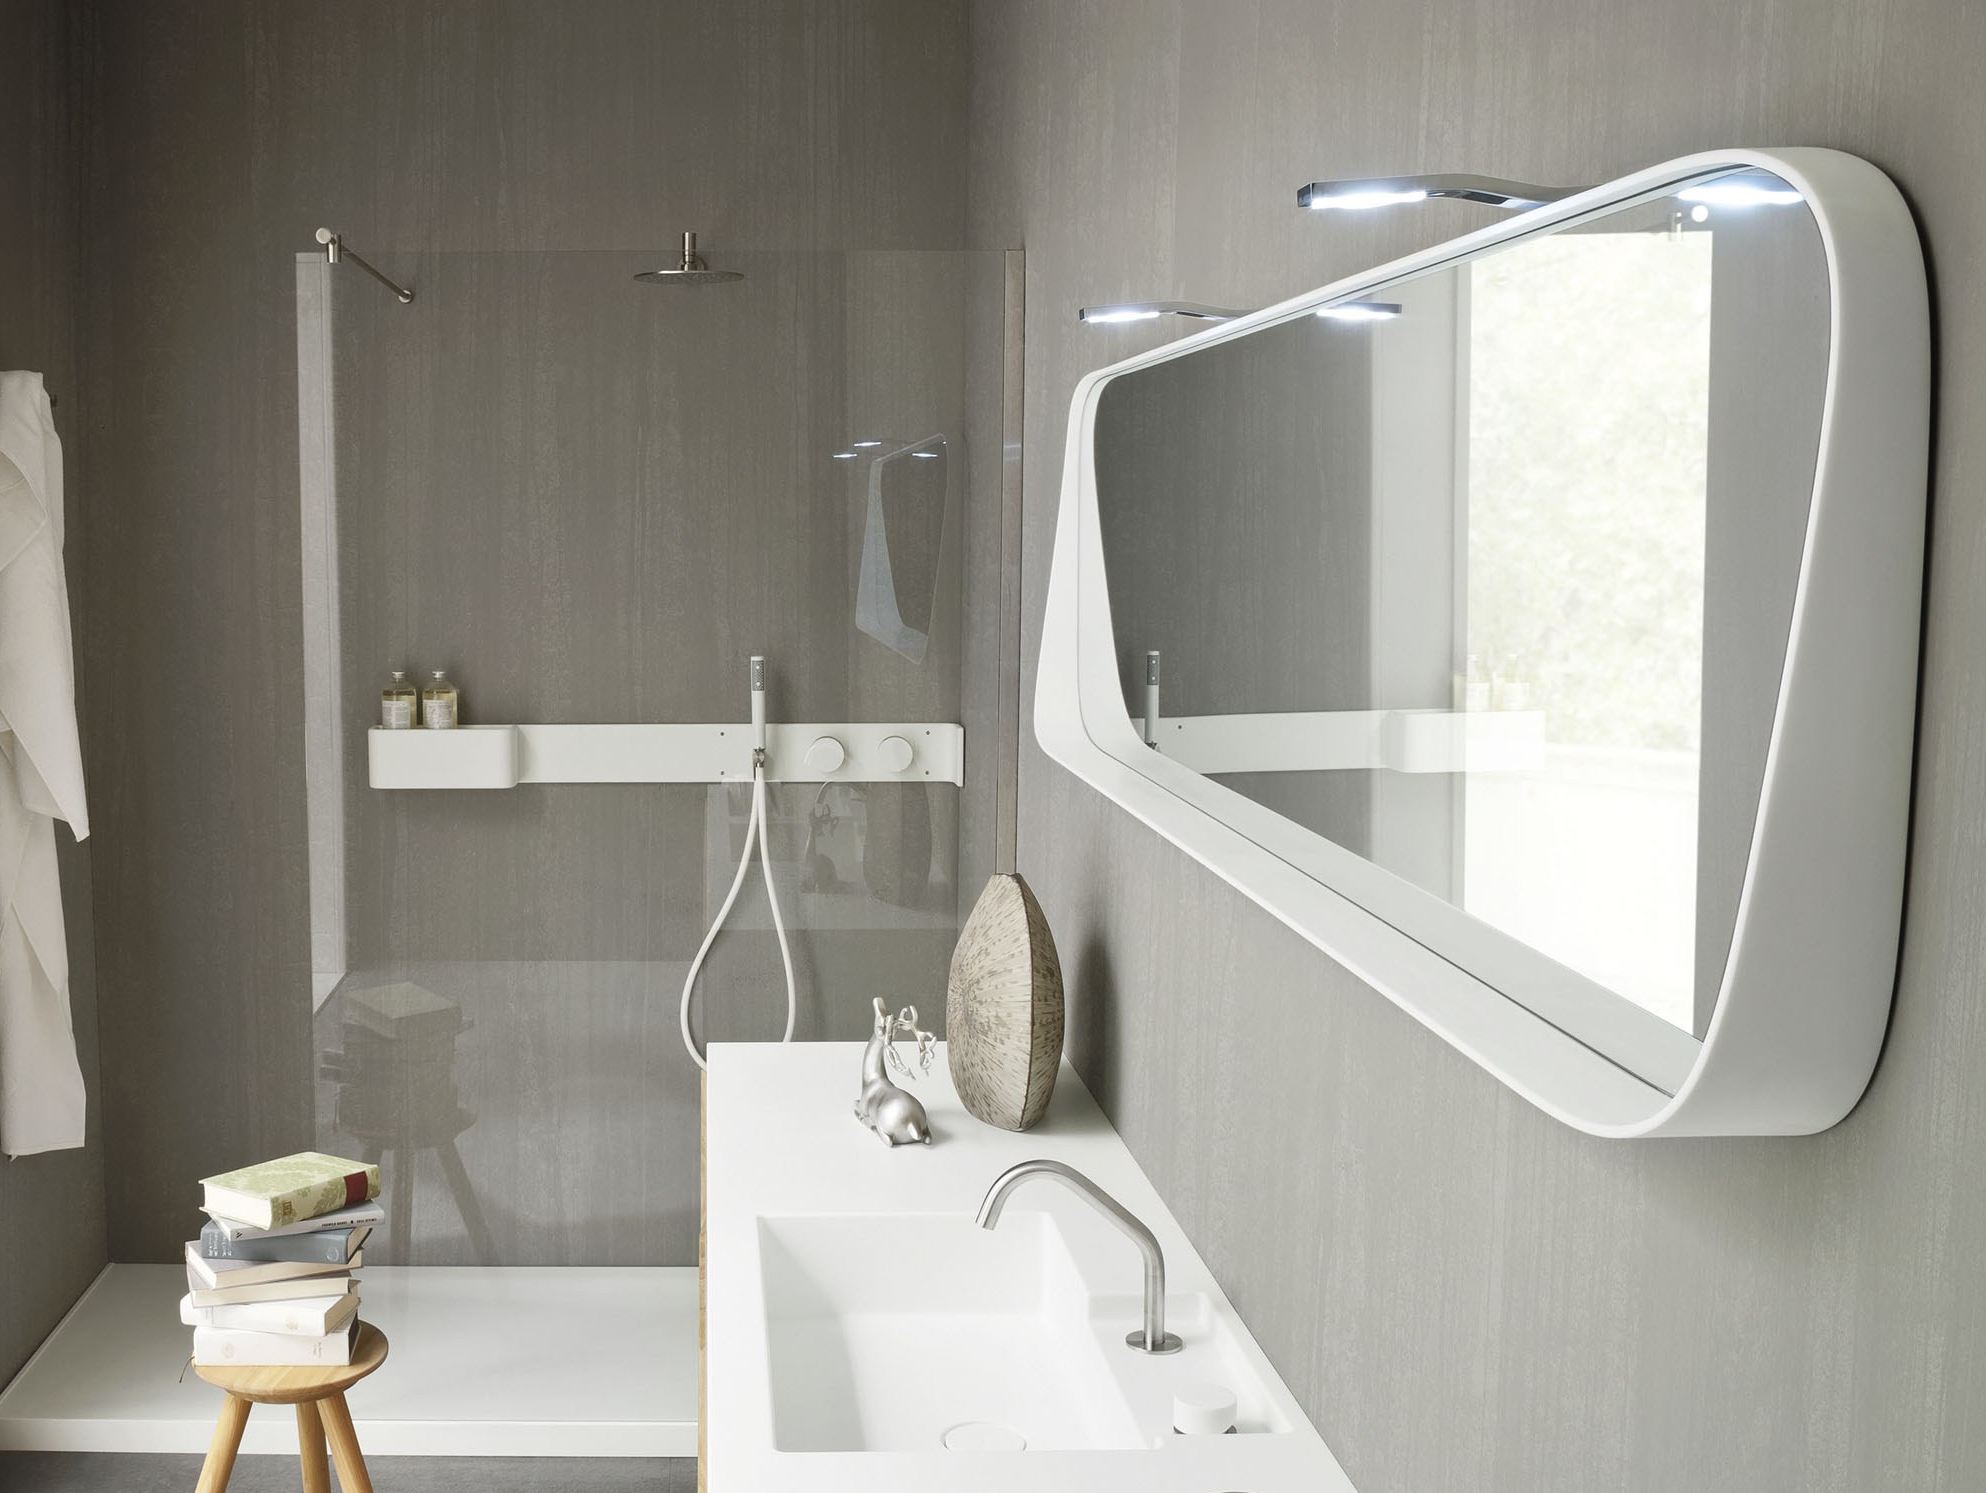 Salle de bain de 5 m² avec miroir